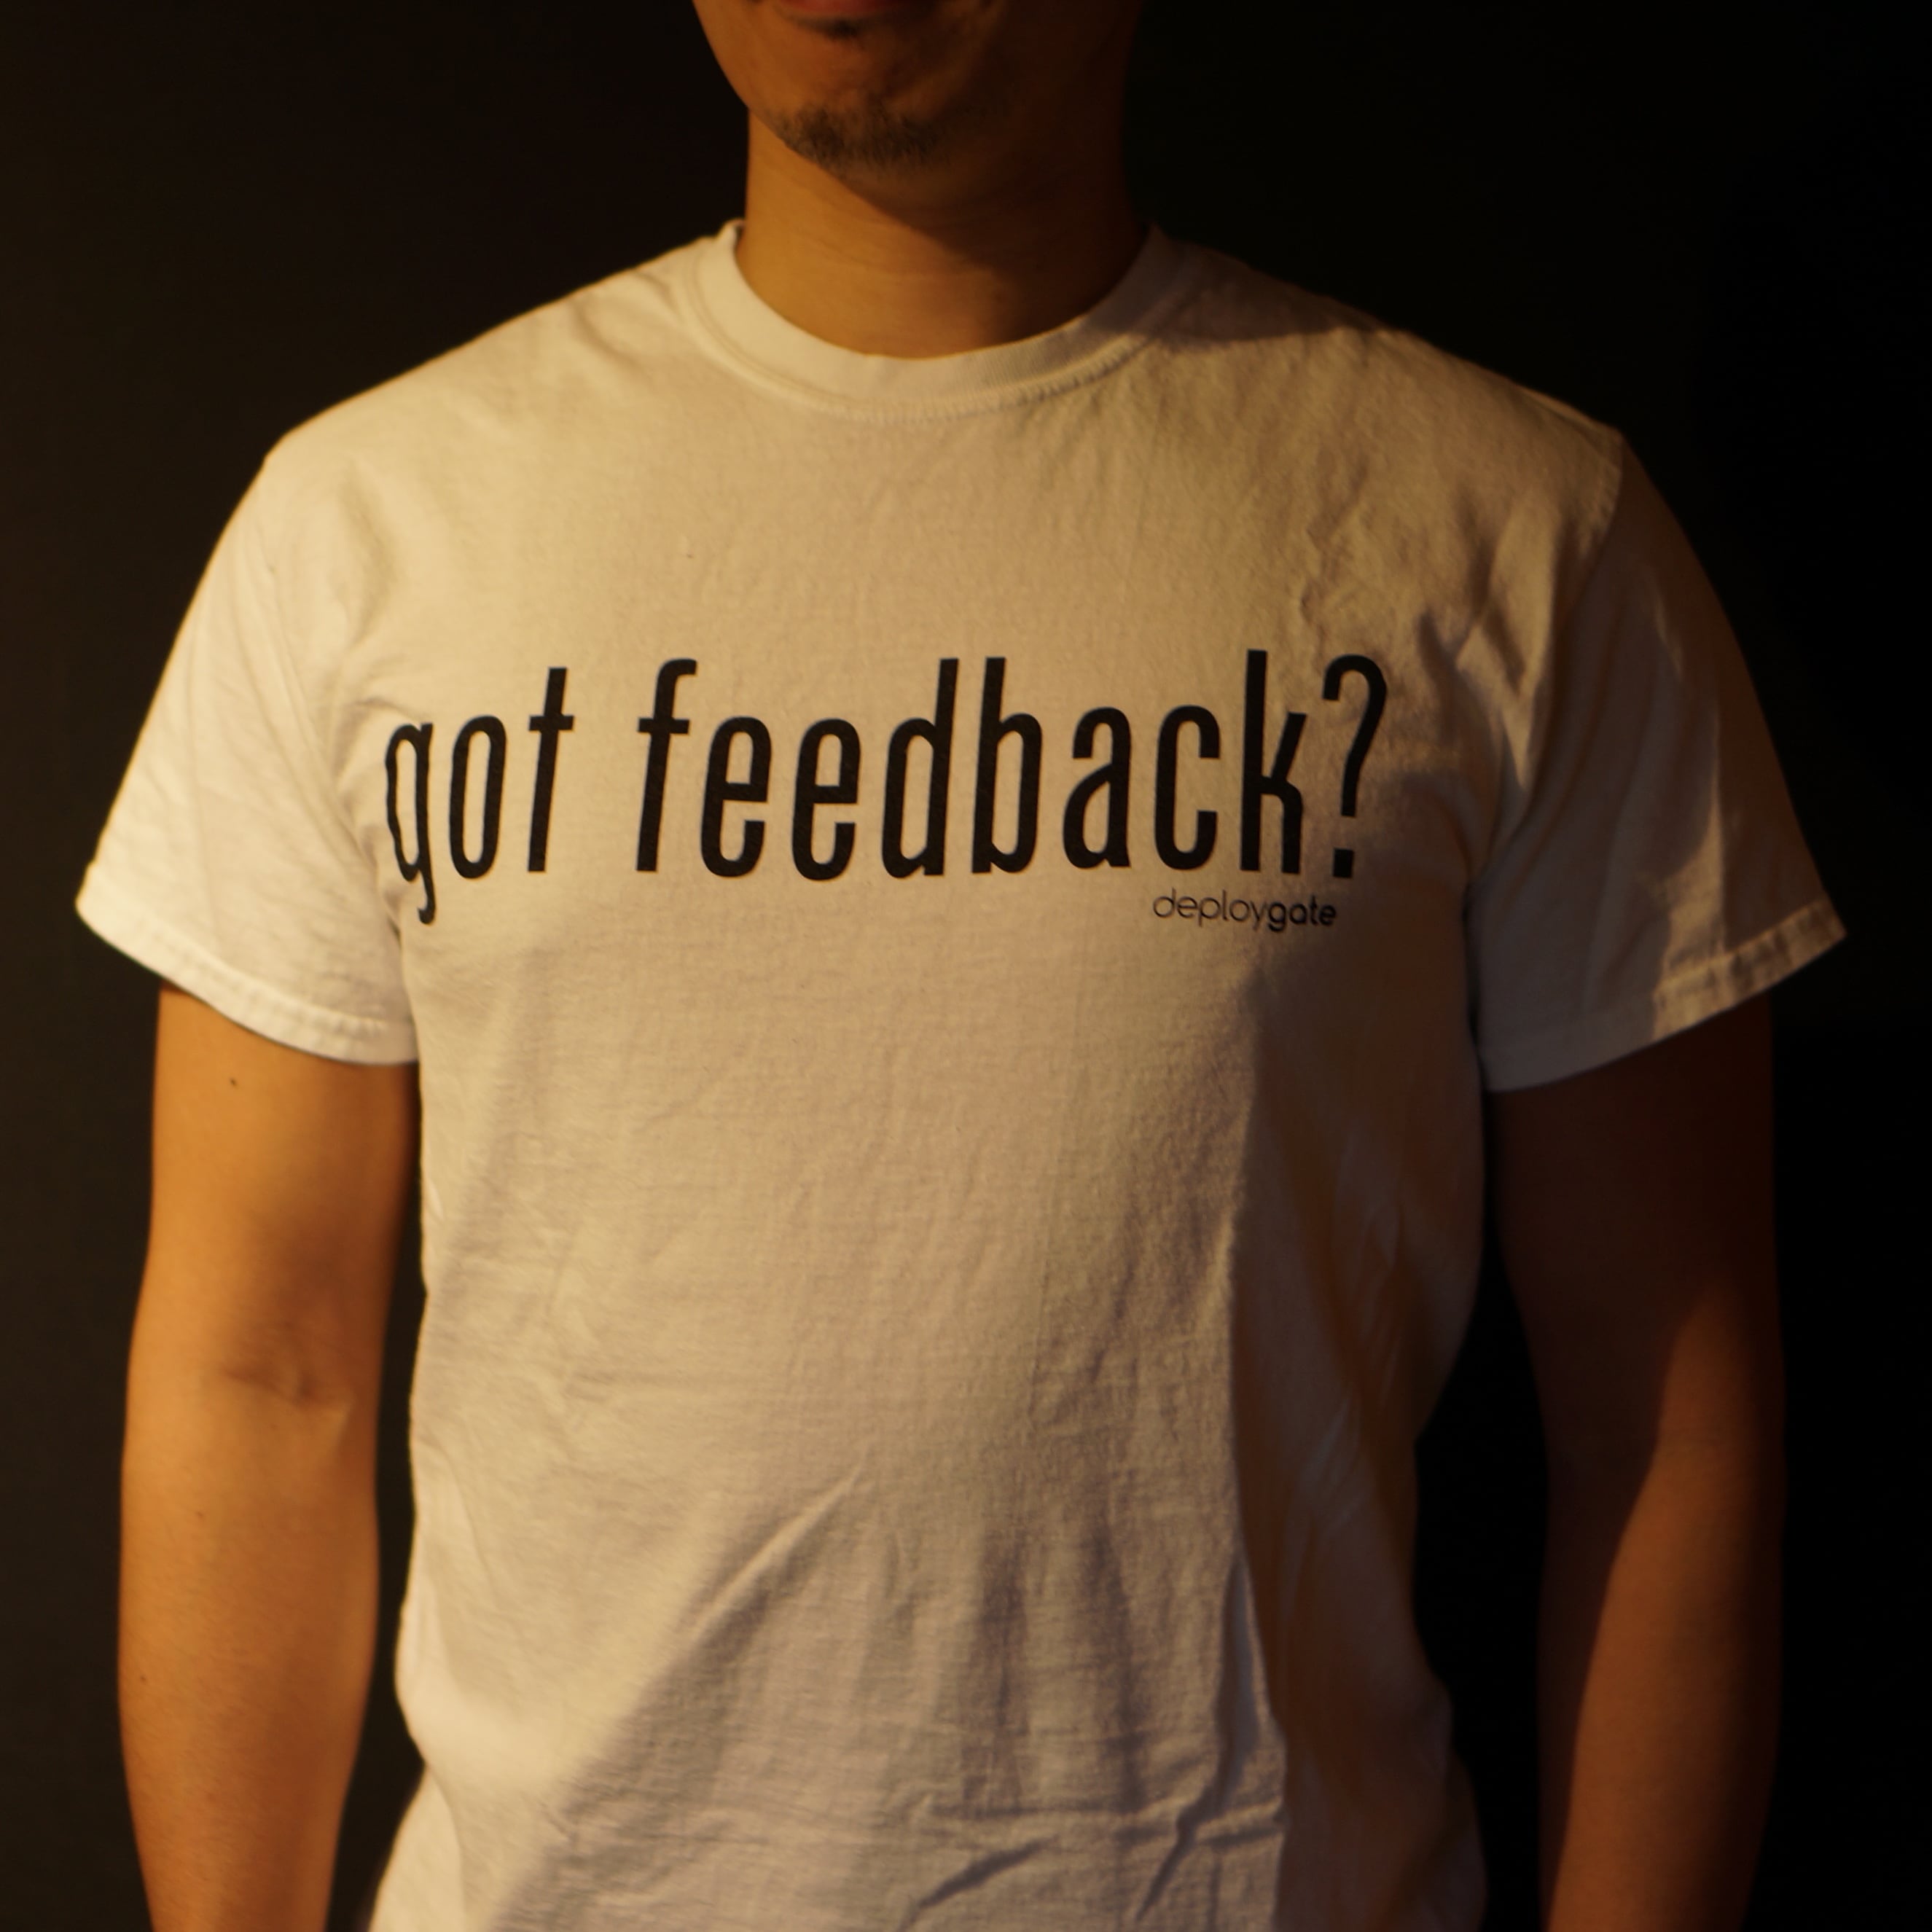 Feedback T-shirt